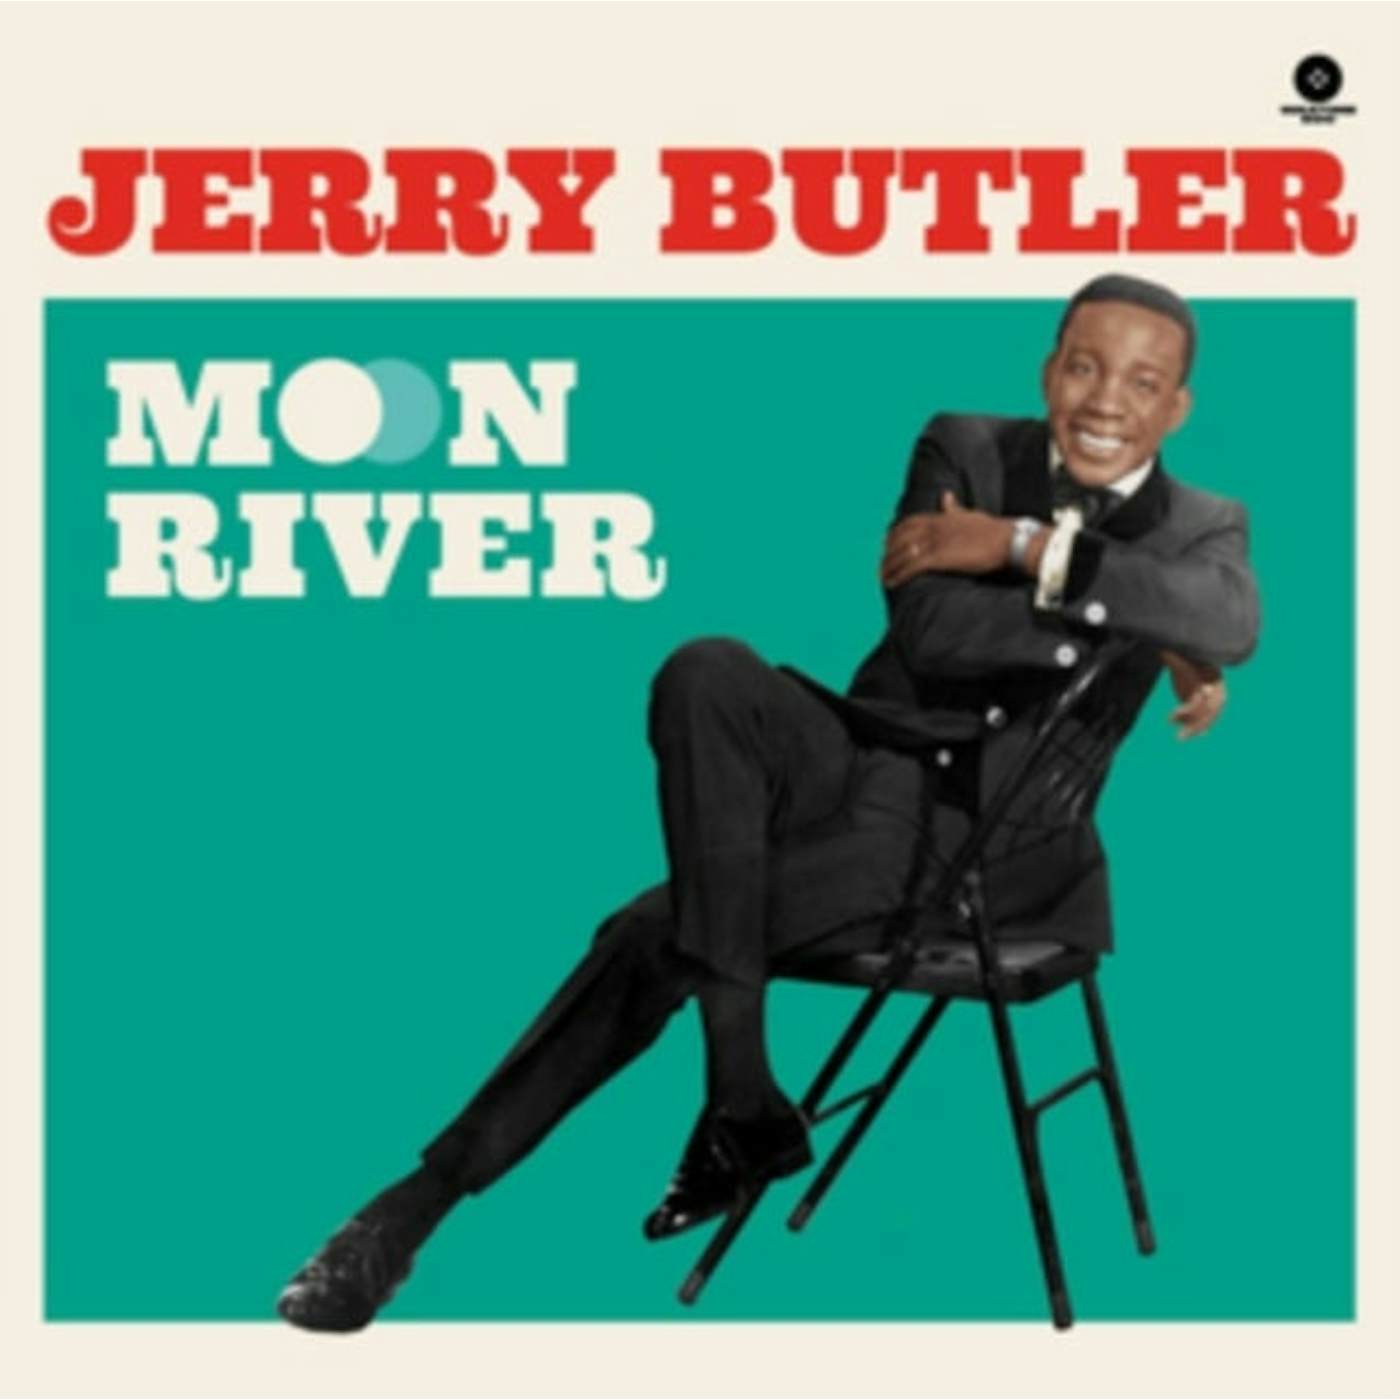 Jerry Butler LP Vinyl Record - Moon River